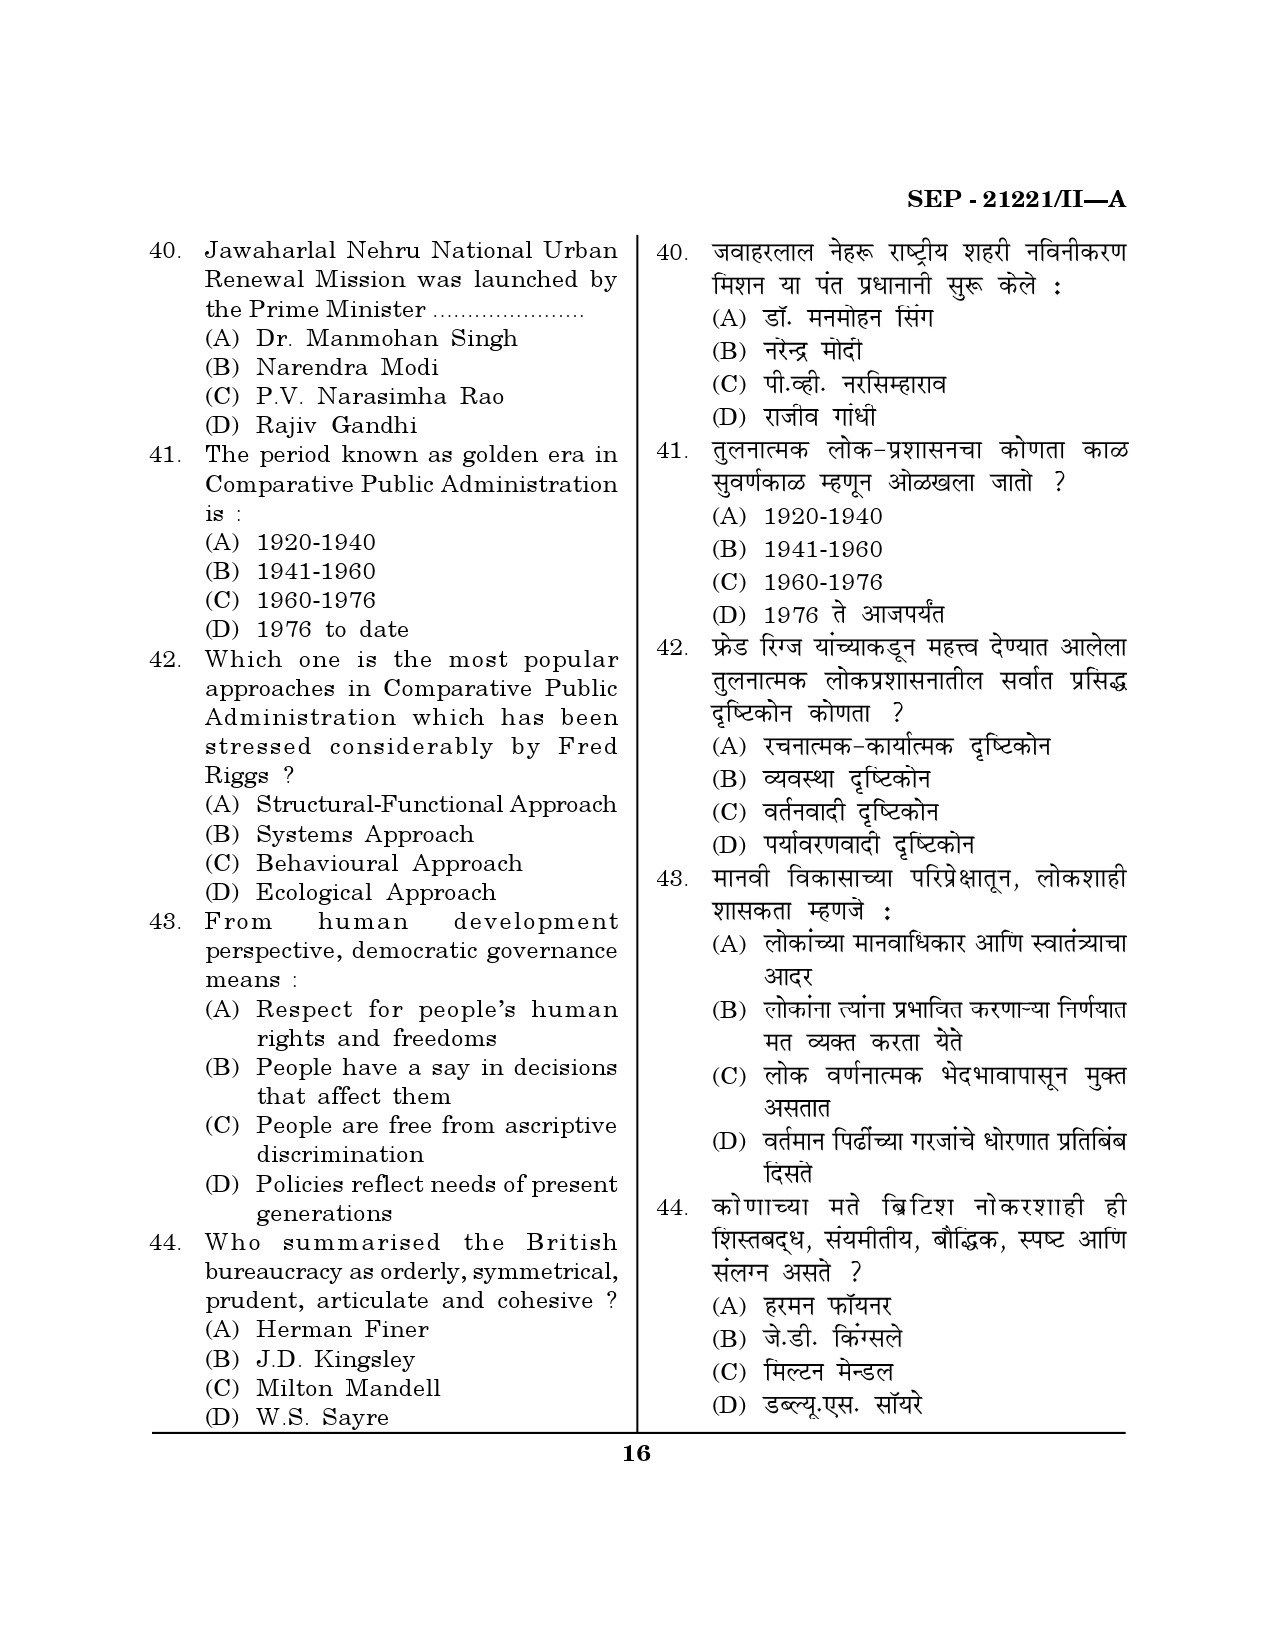 Maharashtra SET Public Administration Exam Question Paper September 2021 15